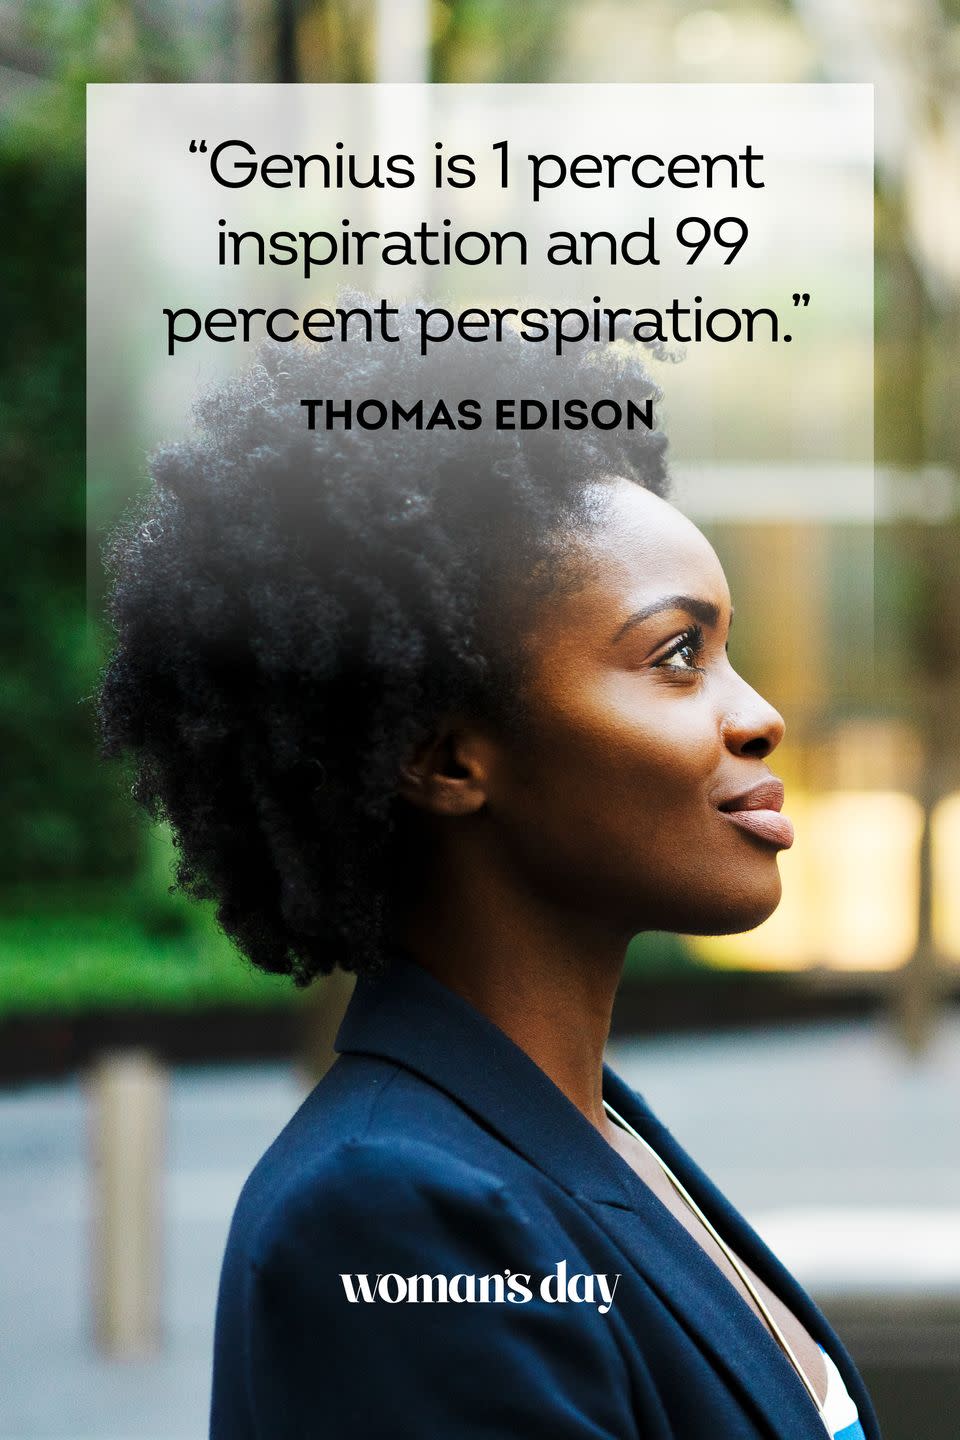 <p>"Genius is 1 percent inspiration and 99 percent perspiration."</p>